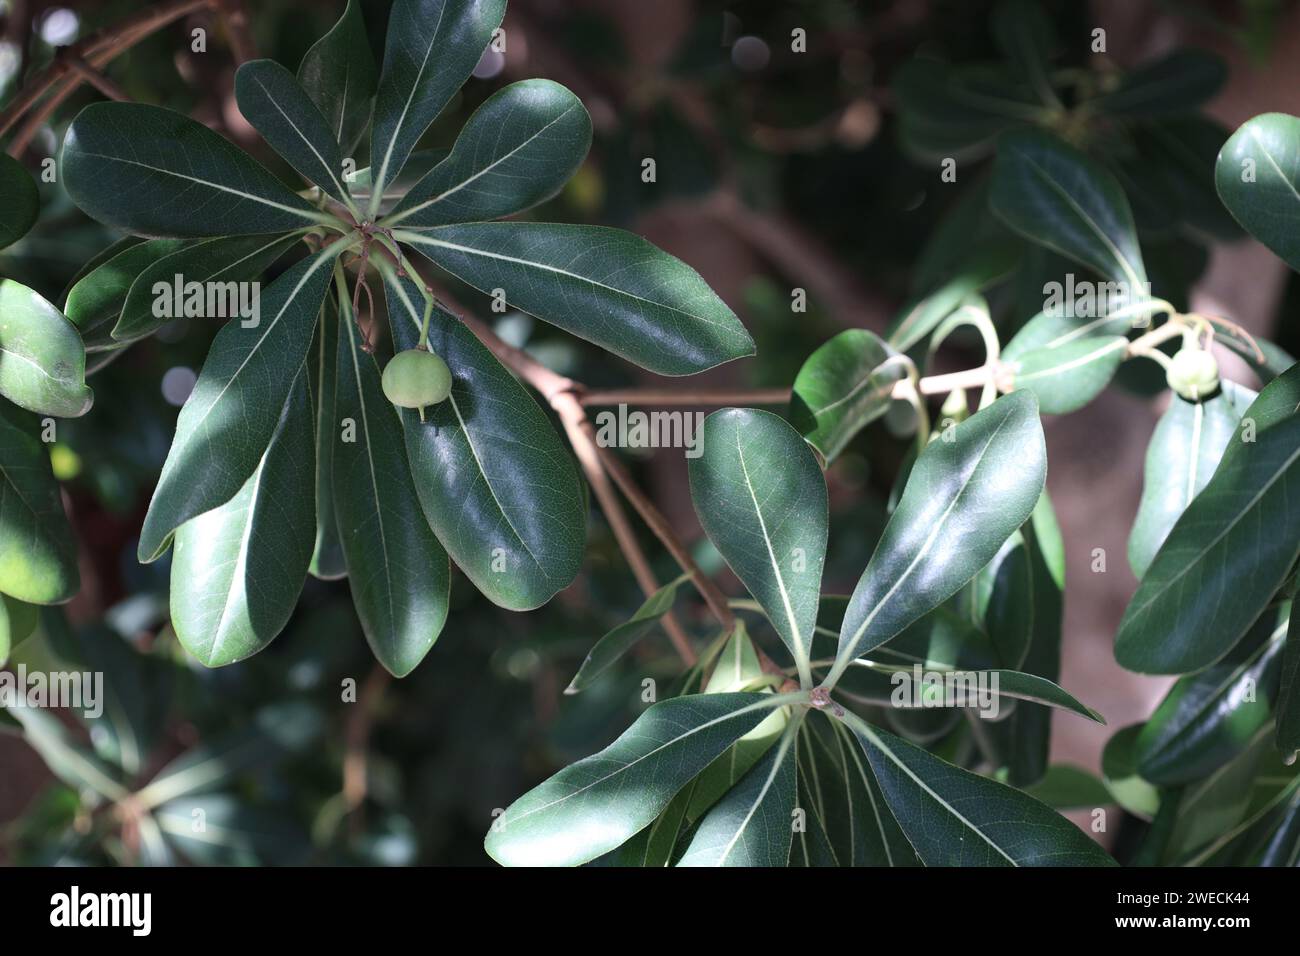 Beautiful pittosporum plant with green berries growing outdoors, closeup Stock Photo